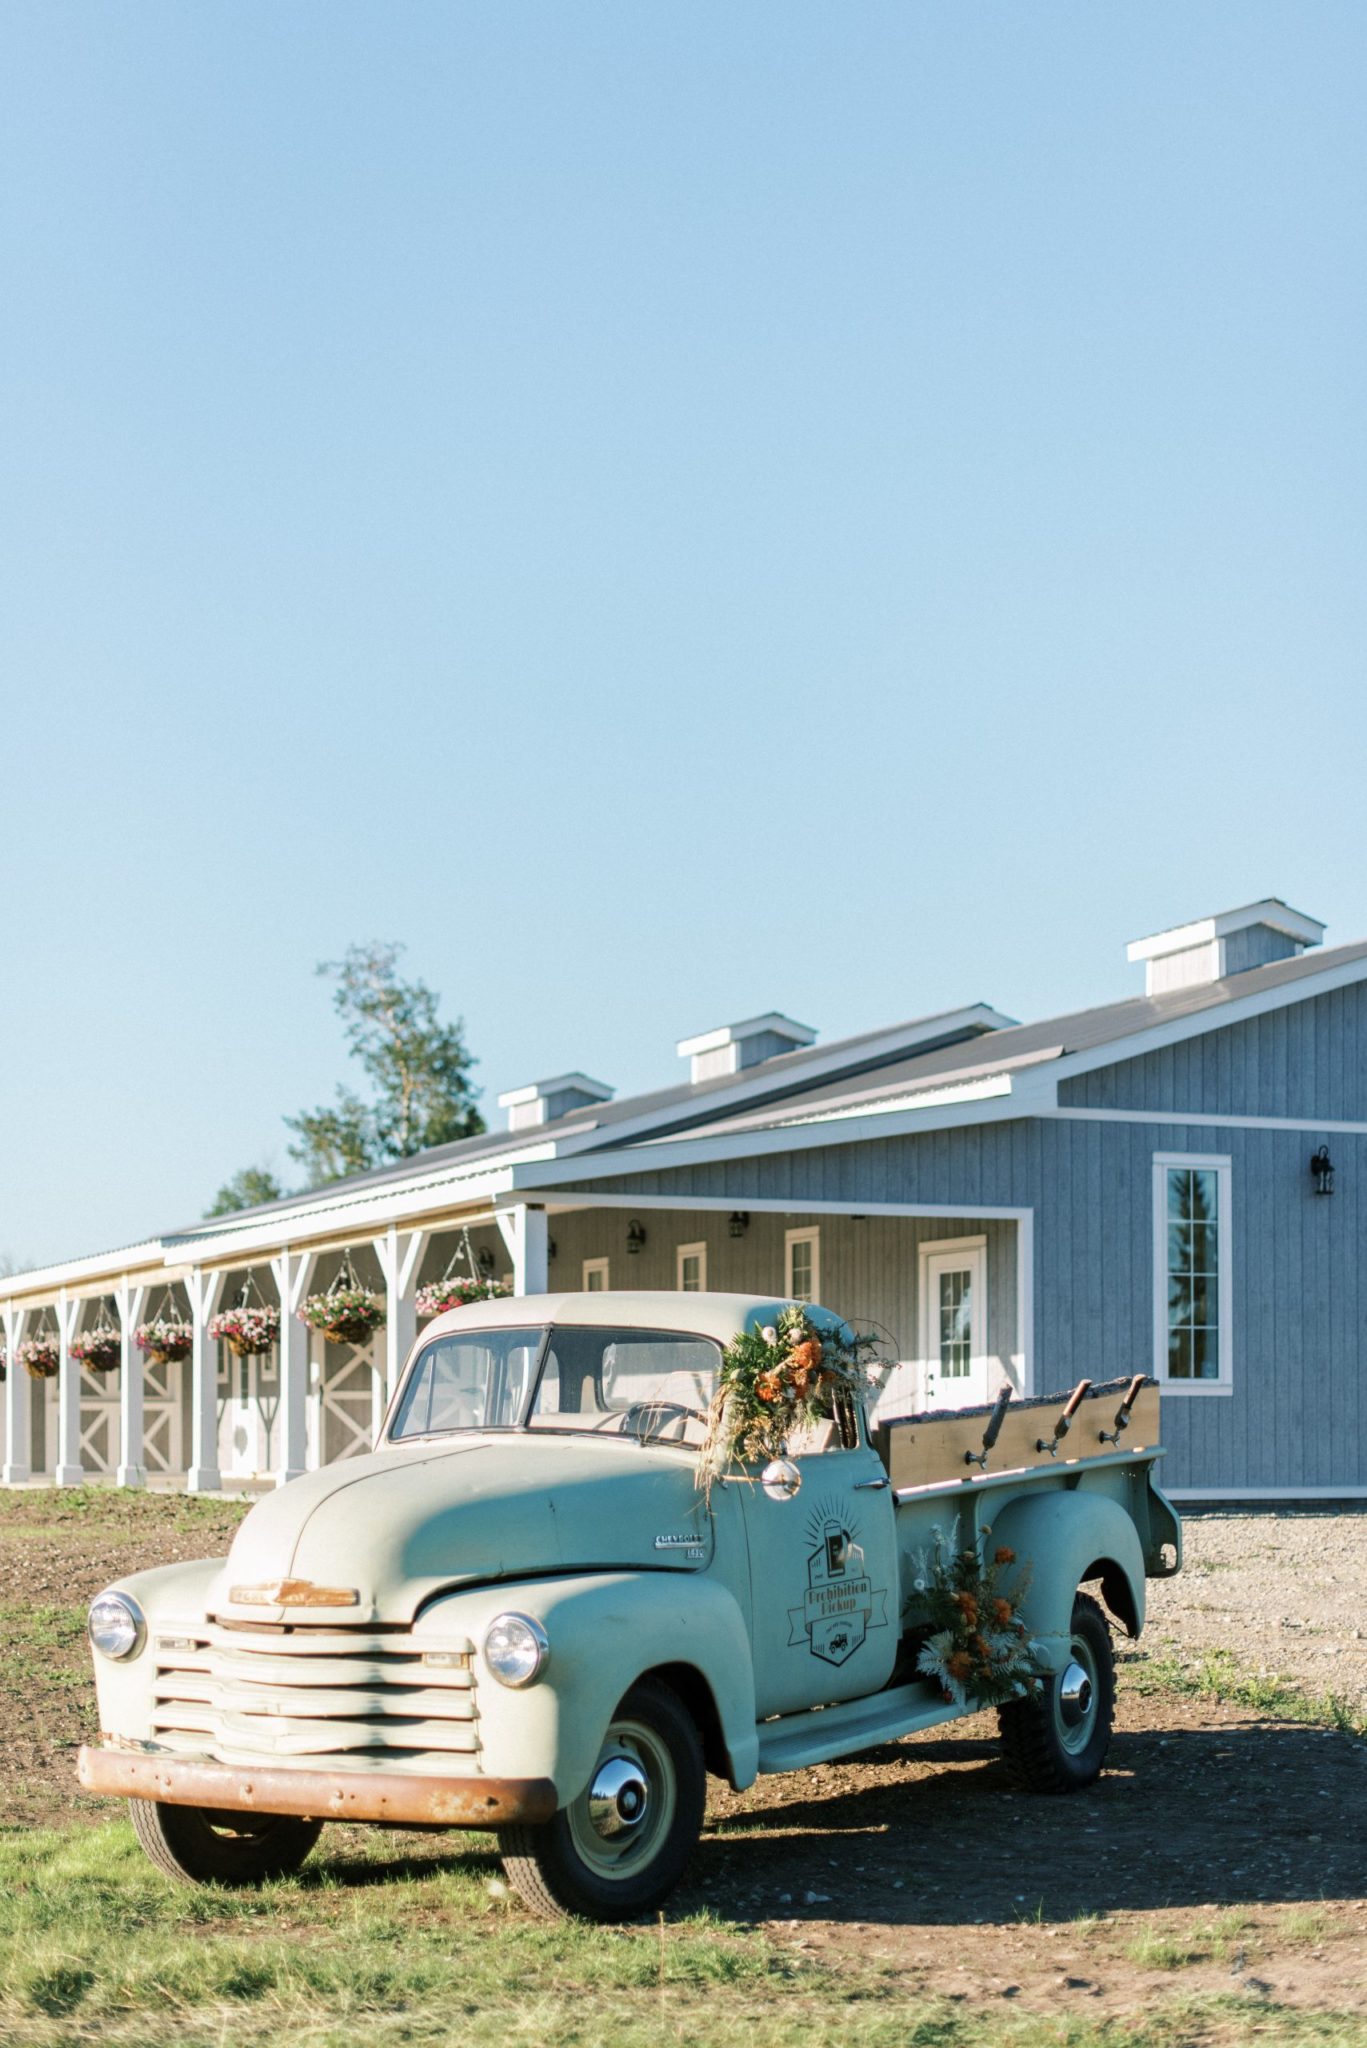 Farm truck wedding inspiration